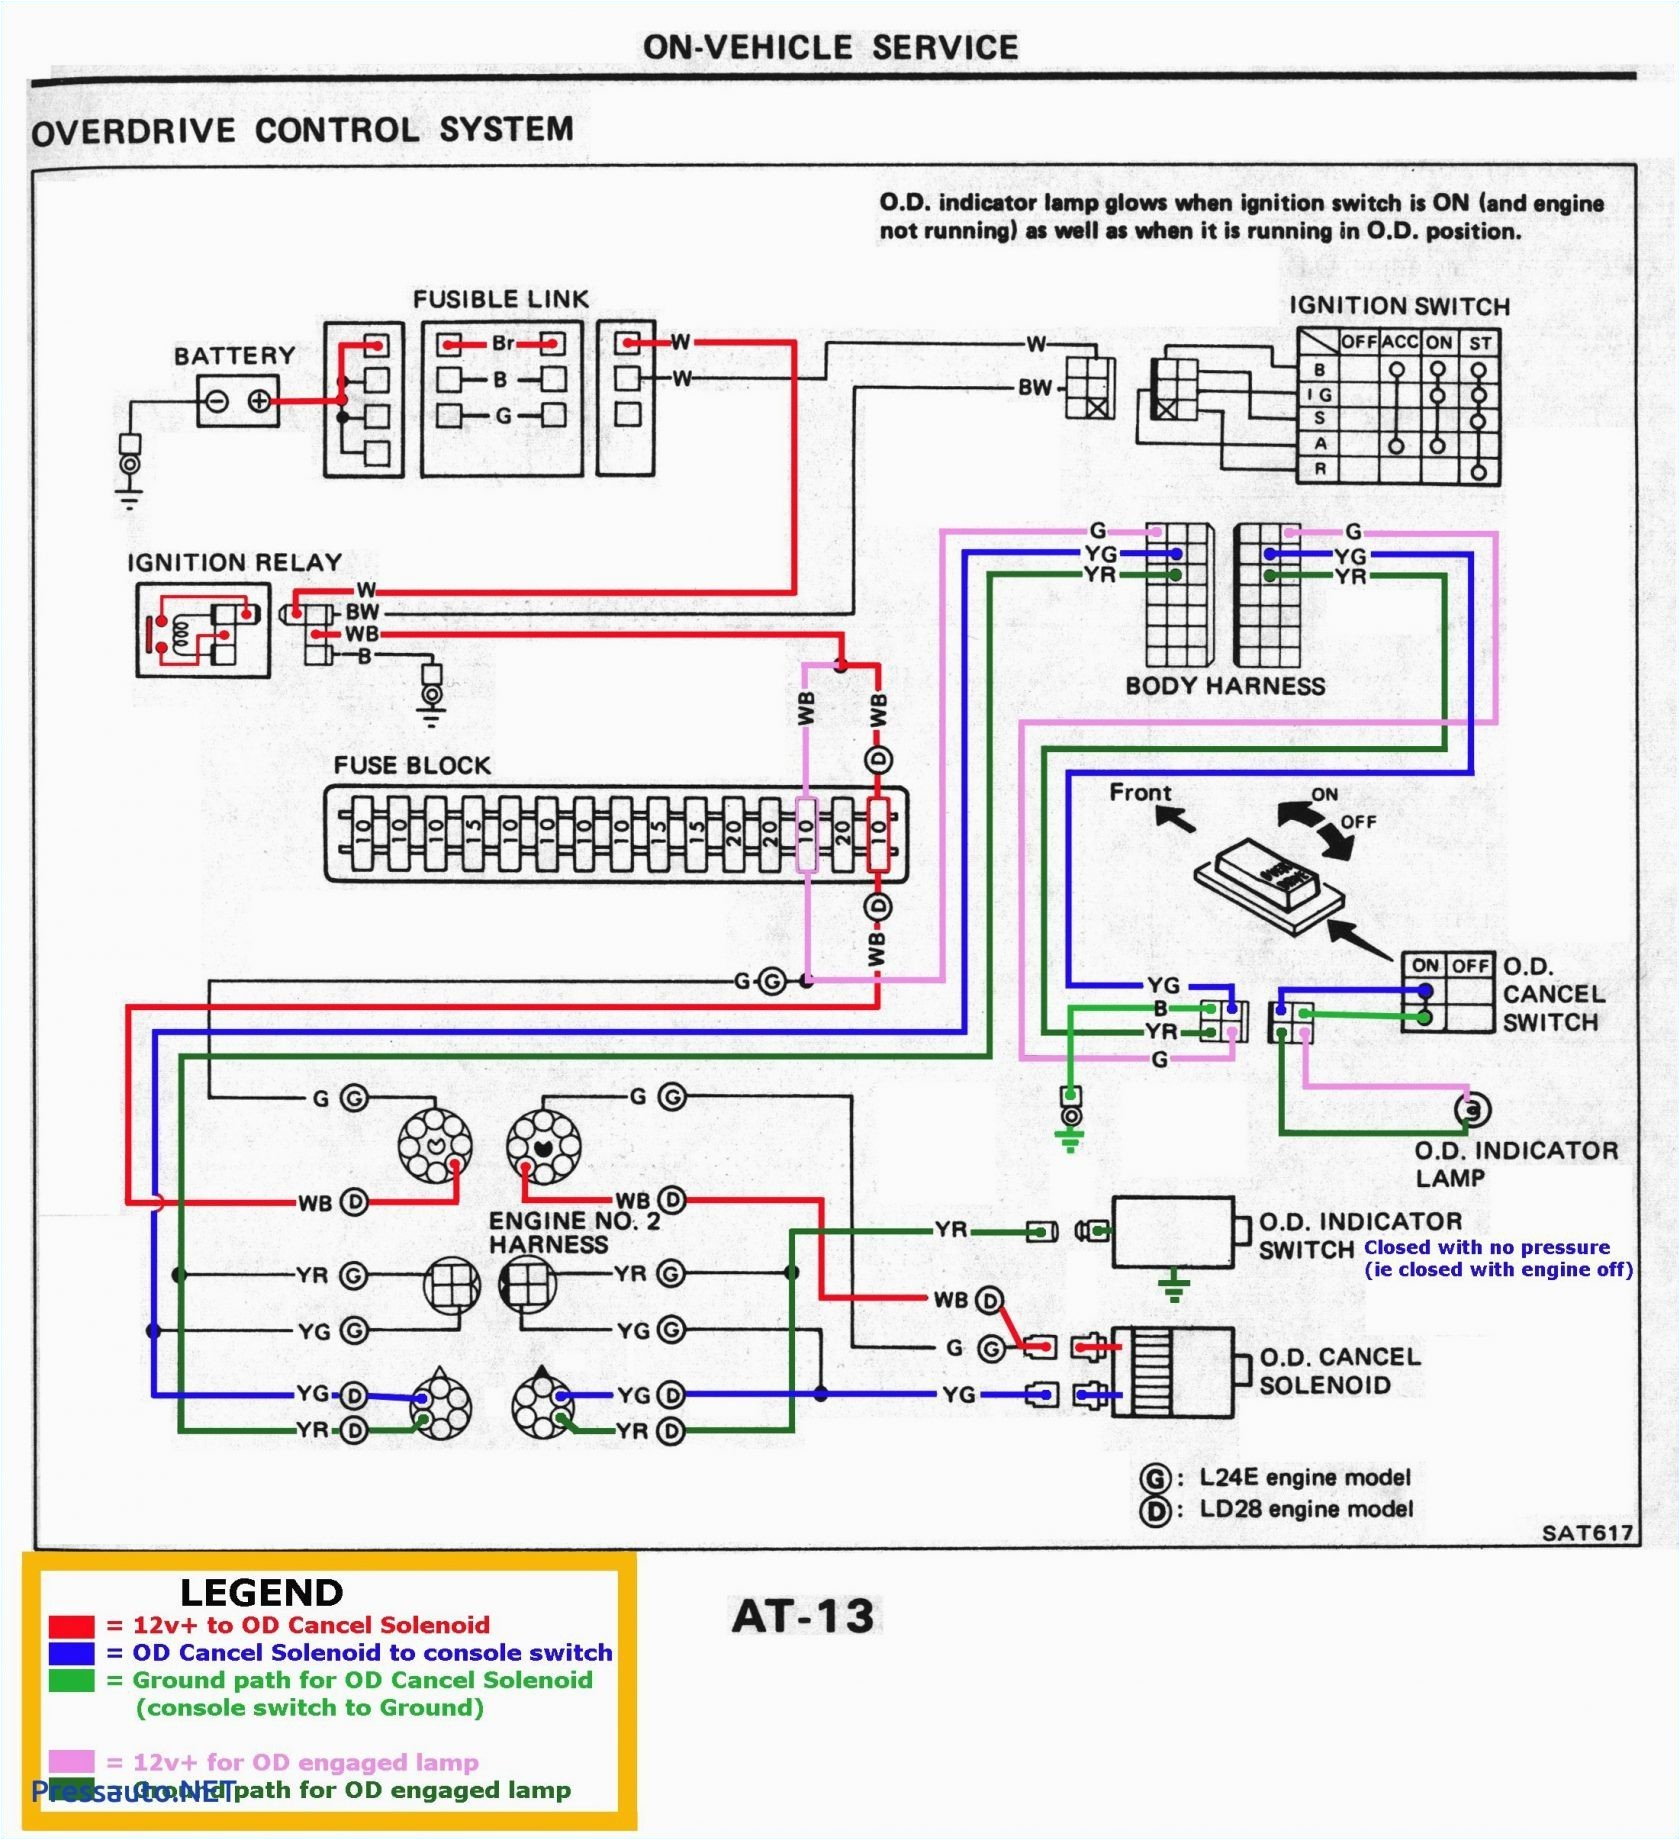 Kenwood Car Stereo Wiring Diagram Wiring Diagram Kenwood Bt755hd Wiring Diagram Paper